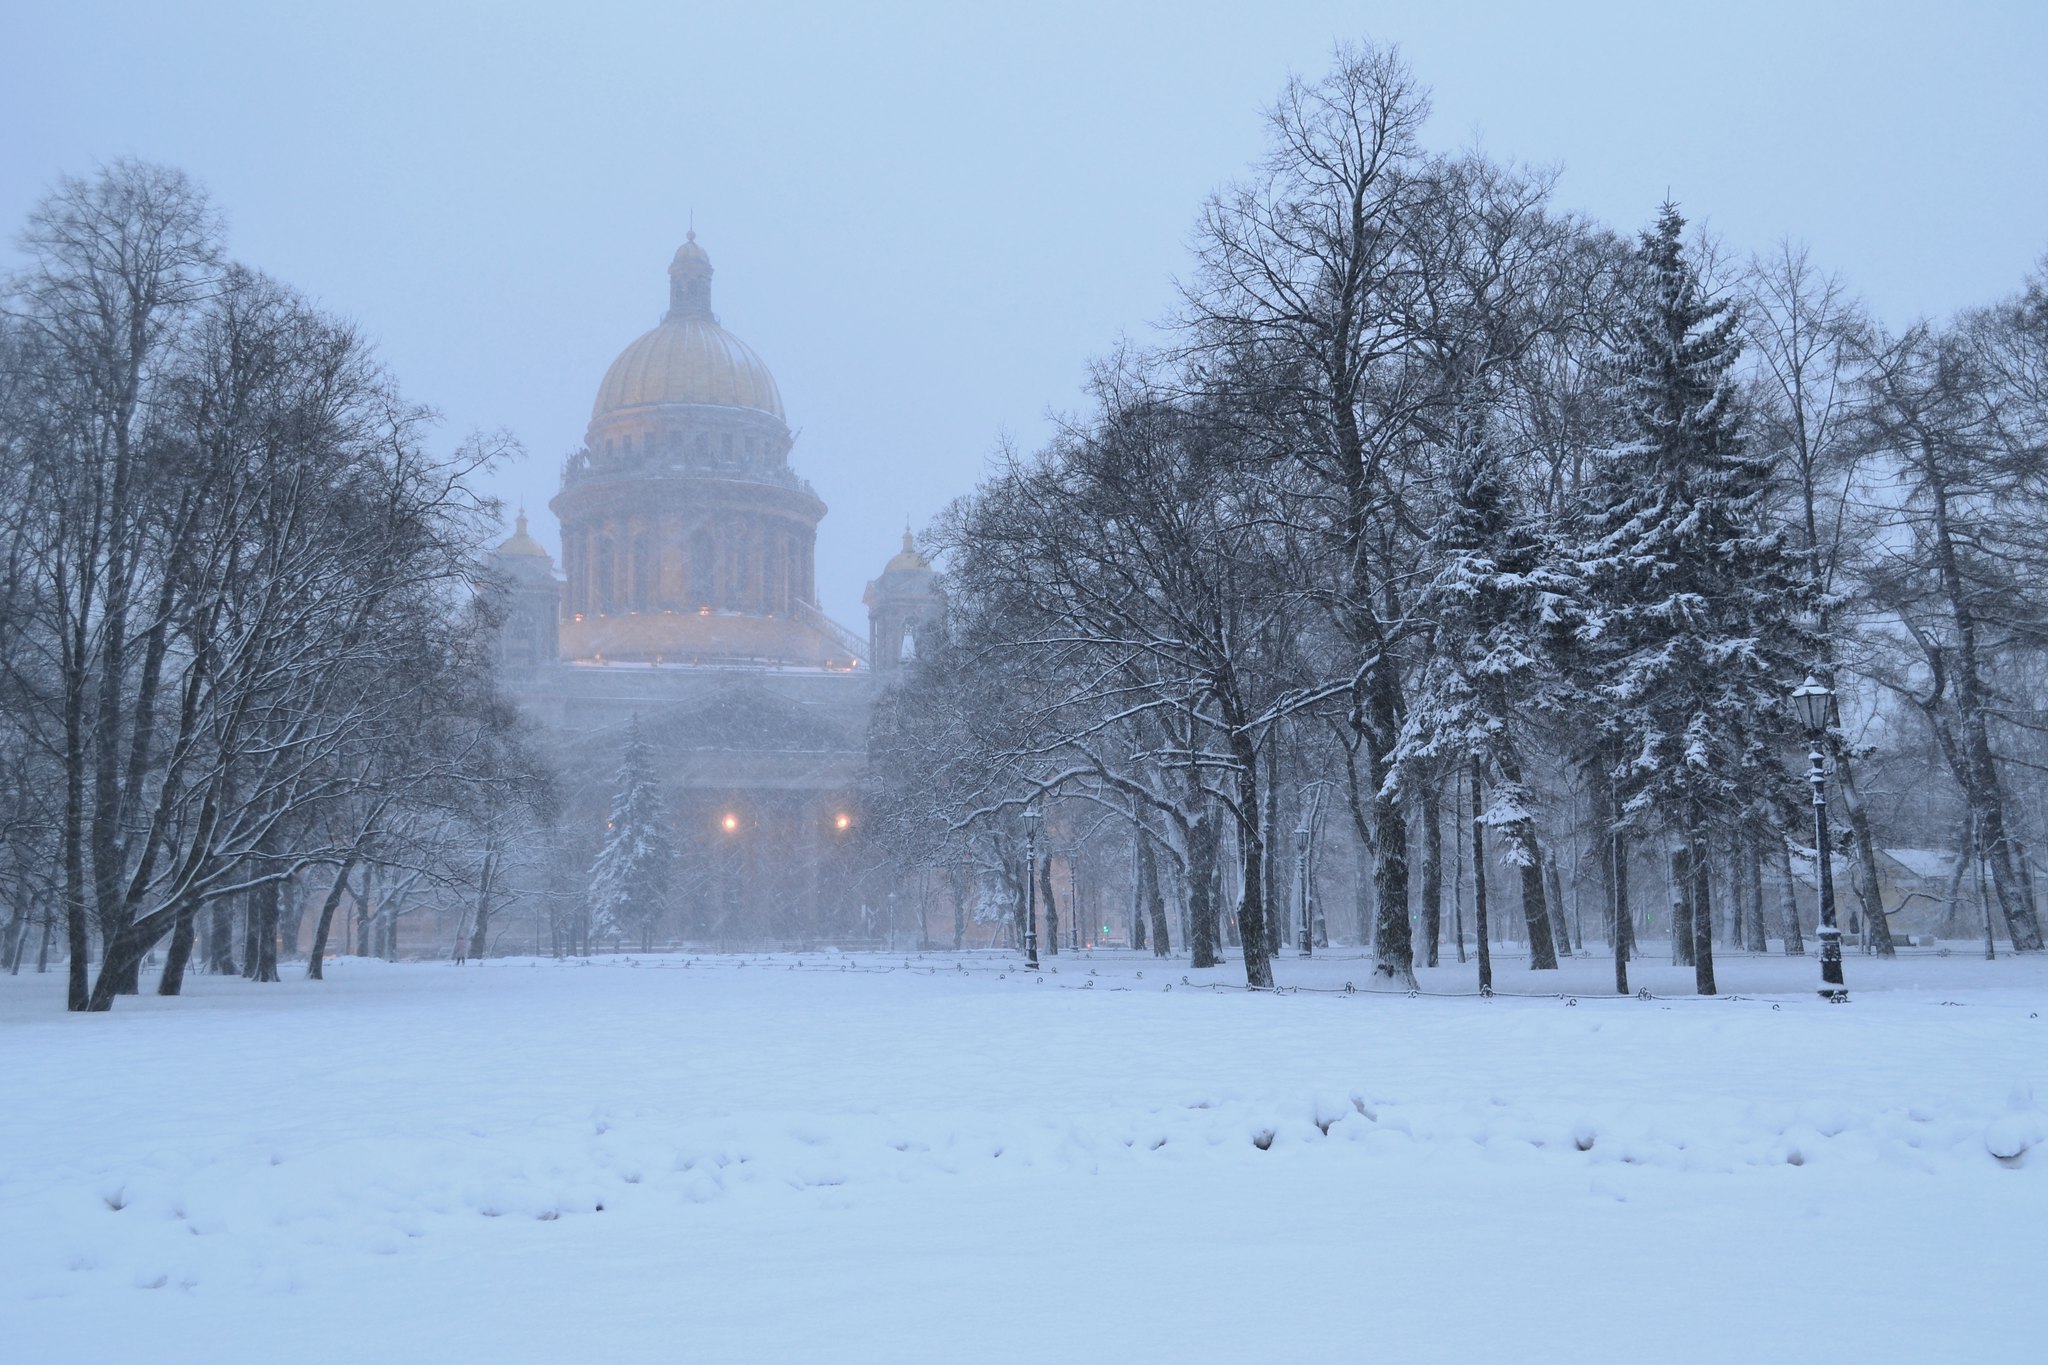 St Petersburg in the snow